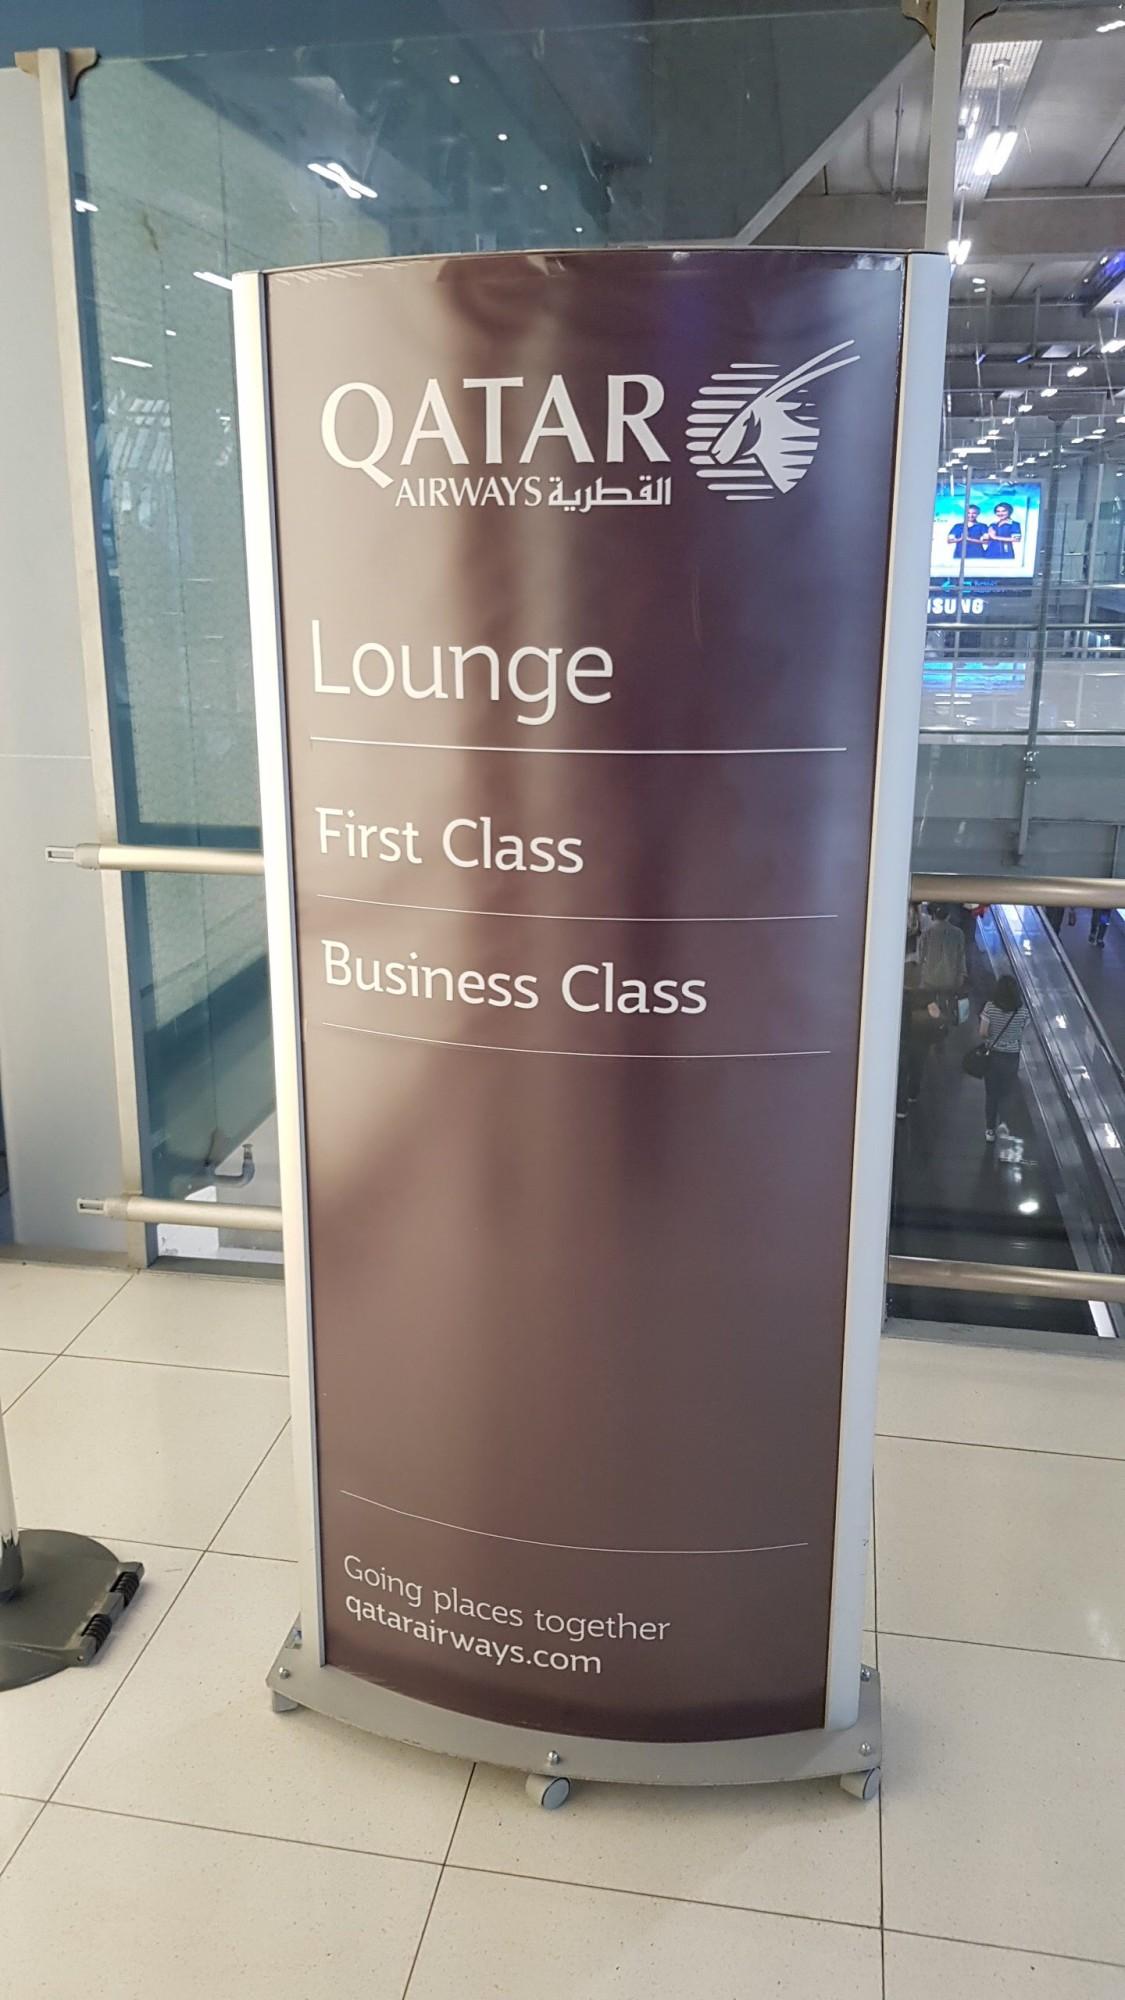 Qatar Airways Premium Lounge image 26 of 52